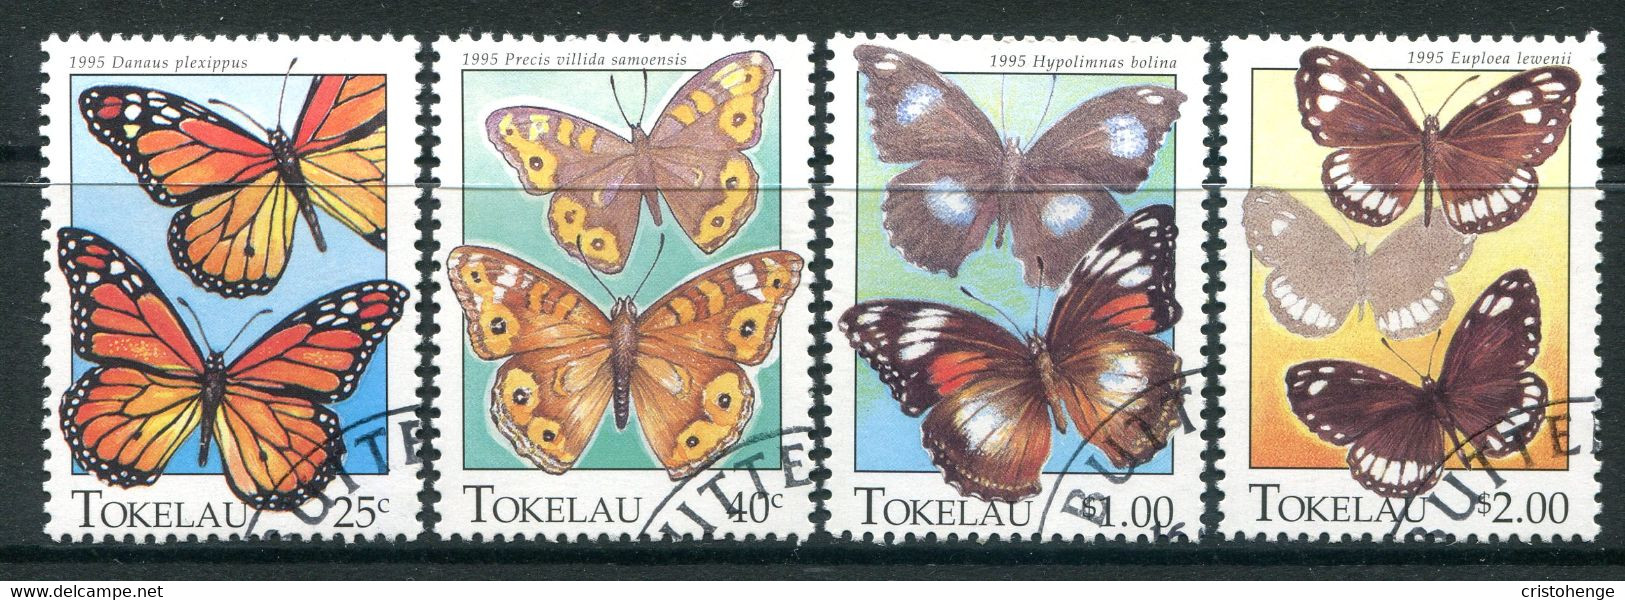 Tokelau 1995 Butterflies & Moths Set CTO Used (SG 230-233) - Tokelau